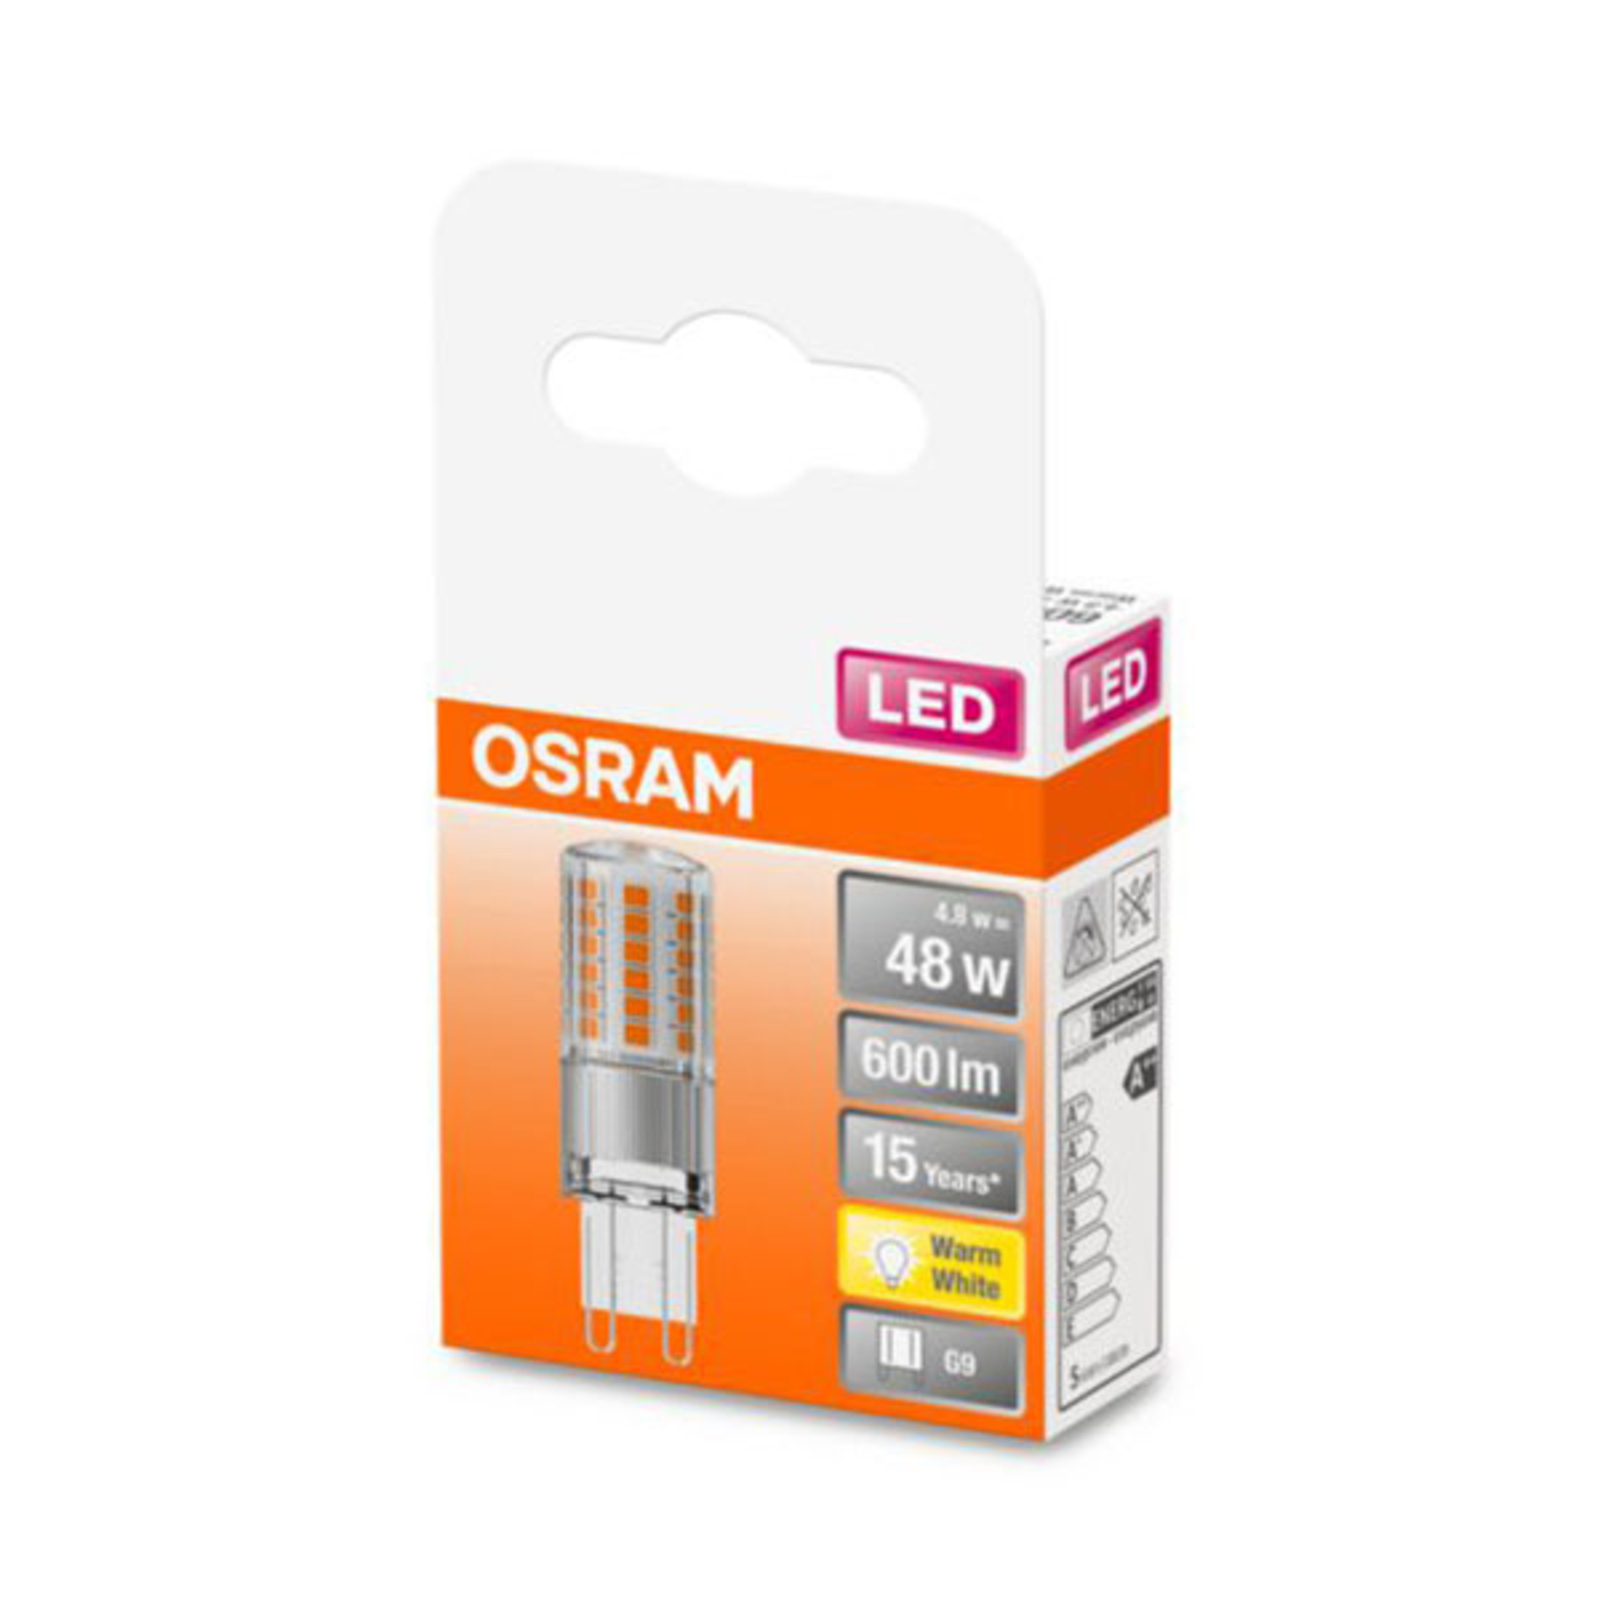 OSRAM bi-pin LED bulb G9 4.8W 2700K clear